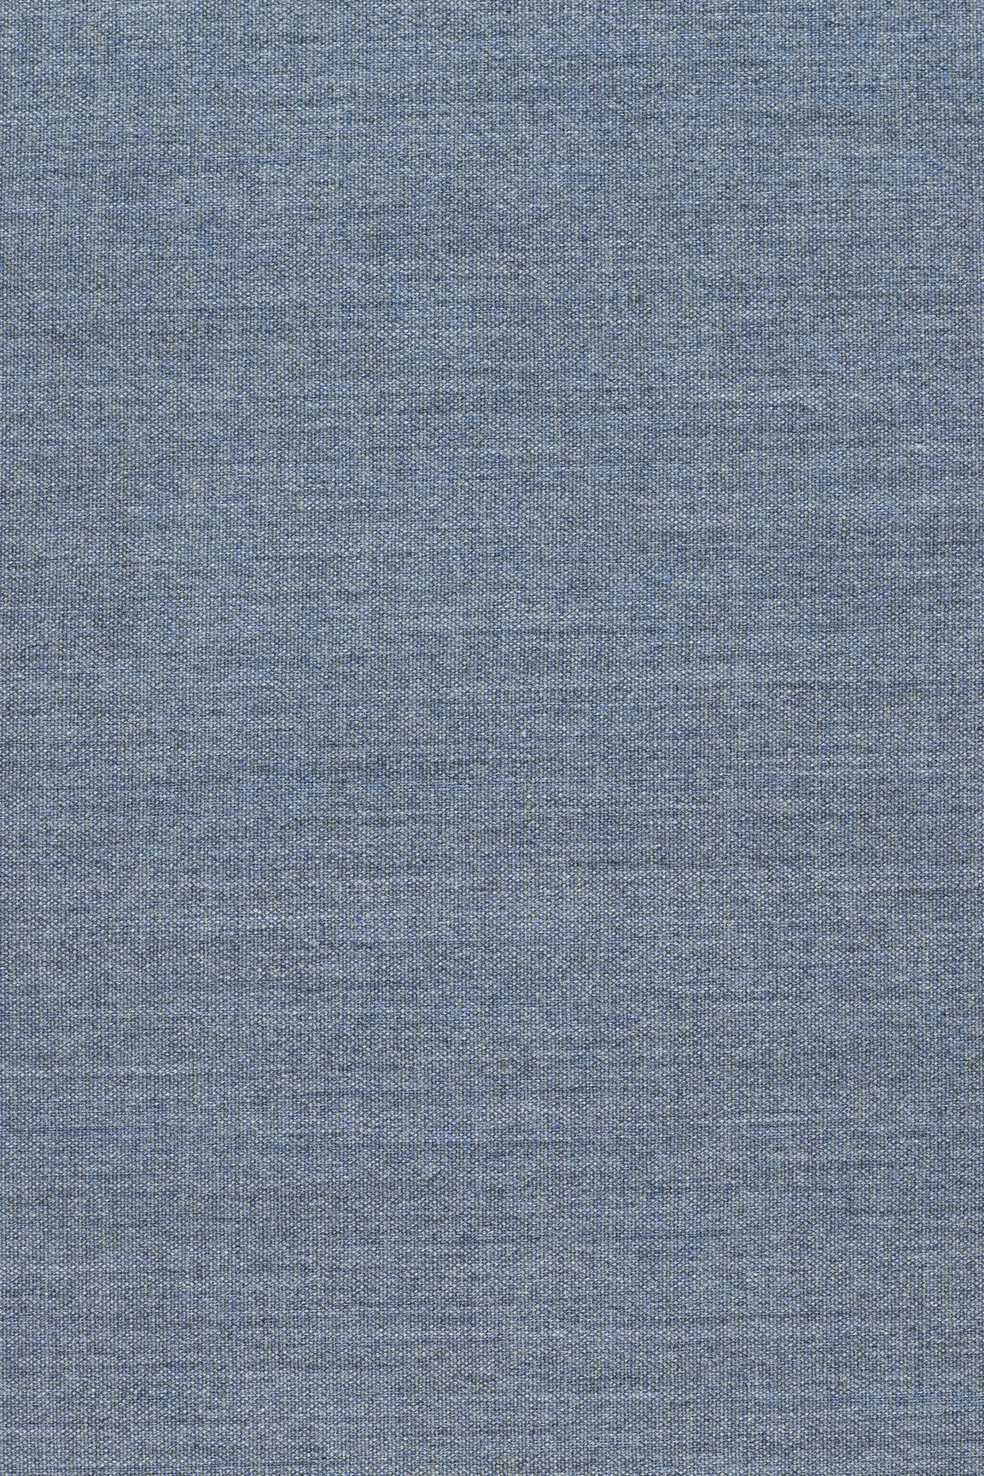 Fabric sample Remix 2 733 blue